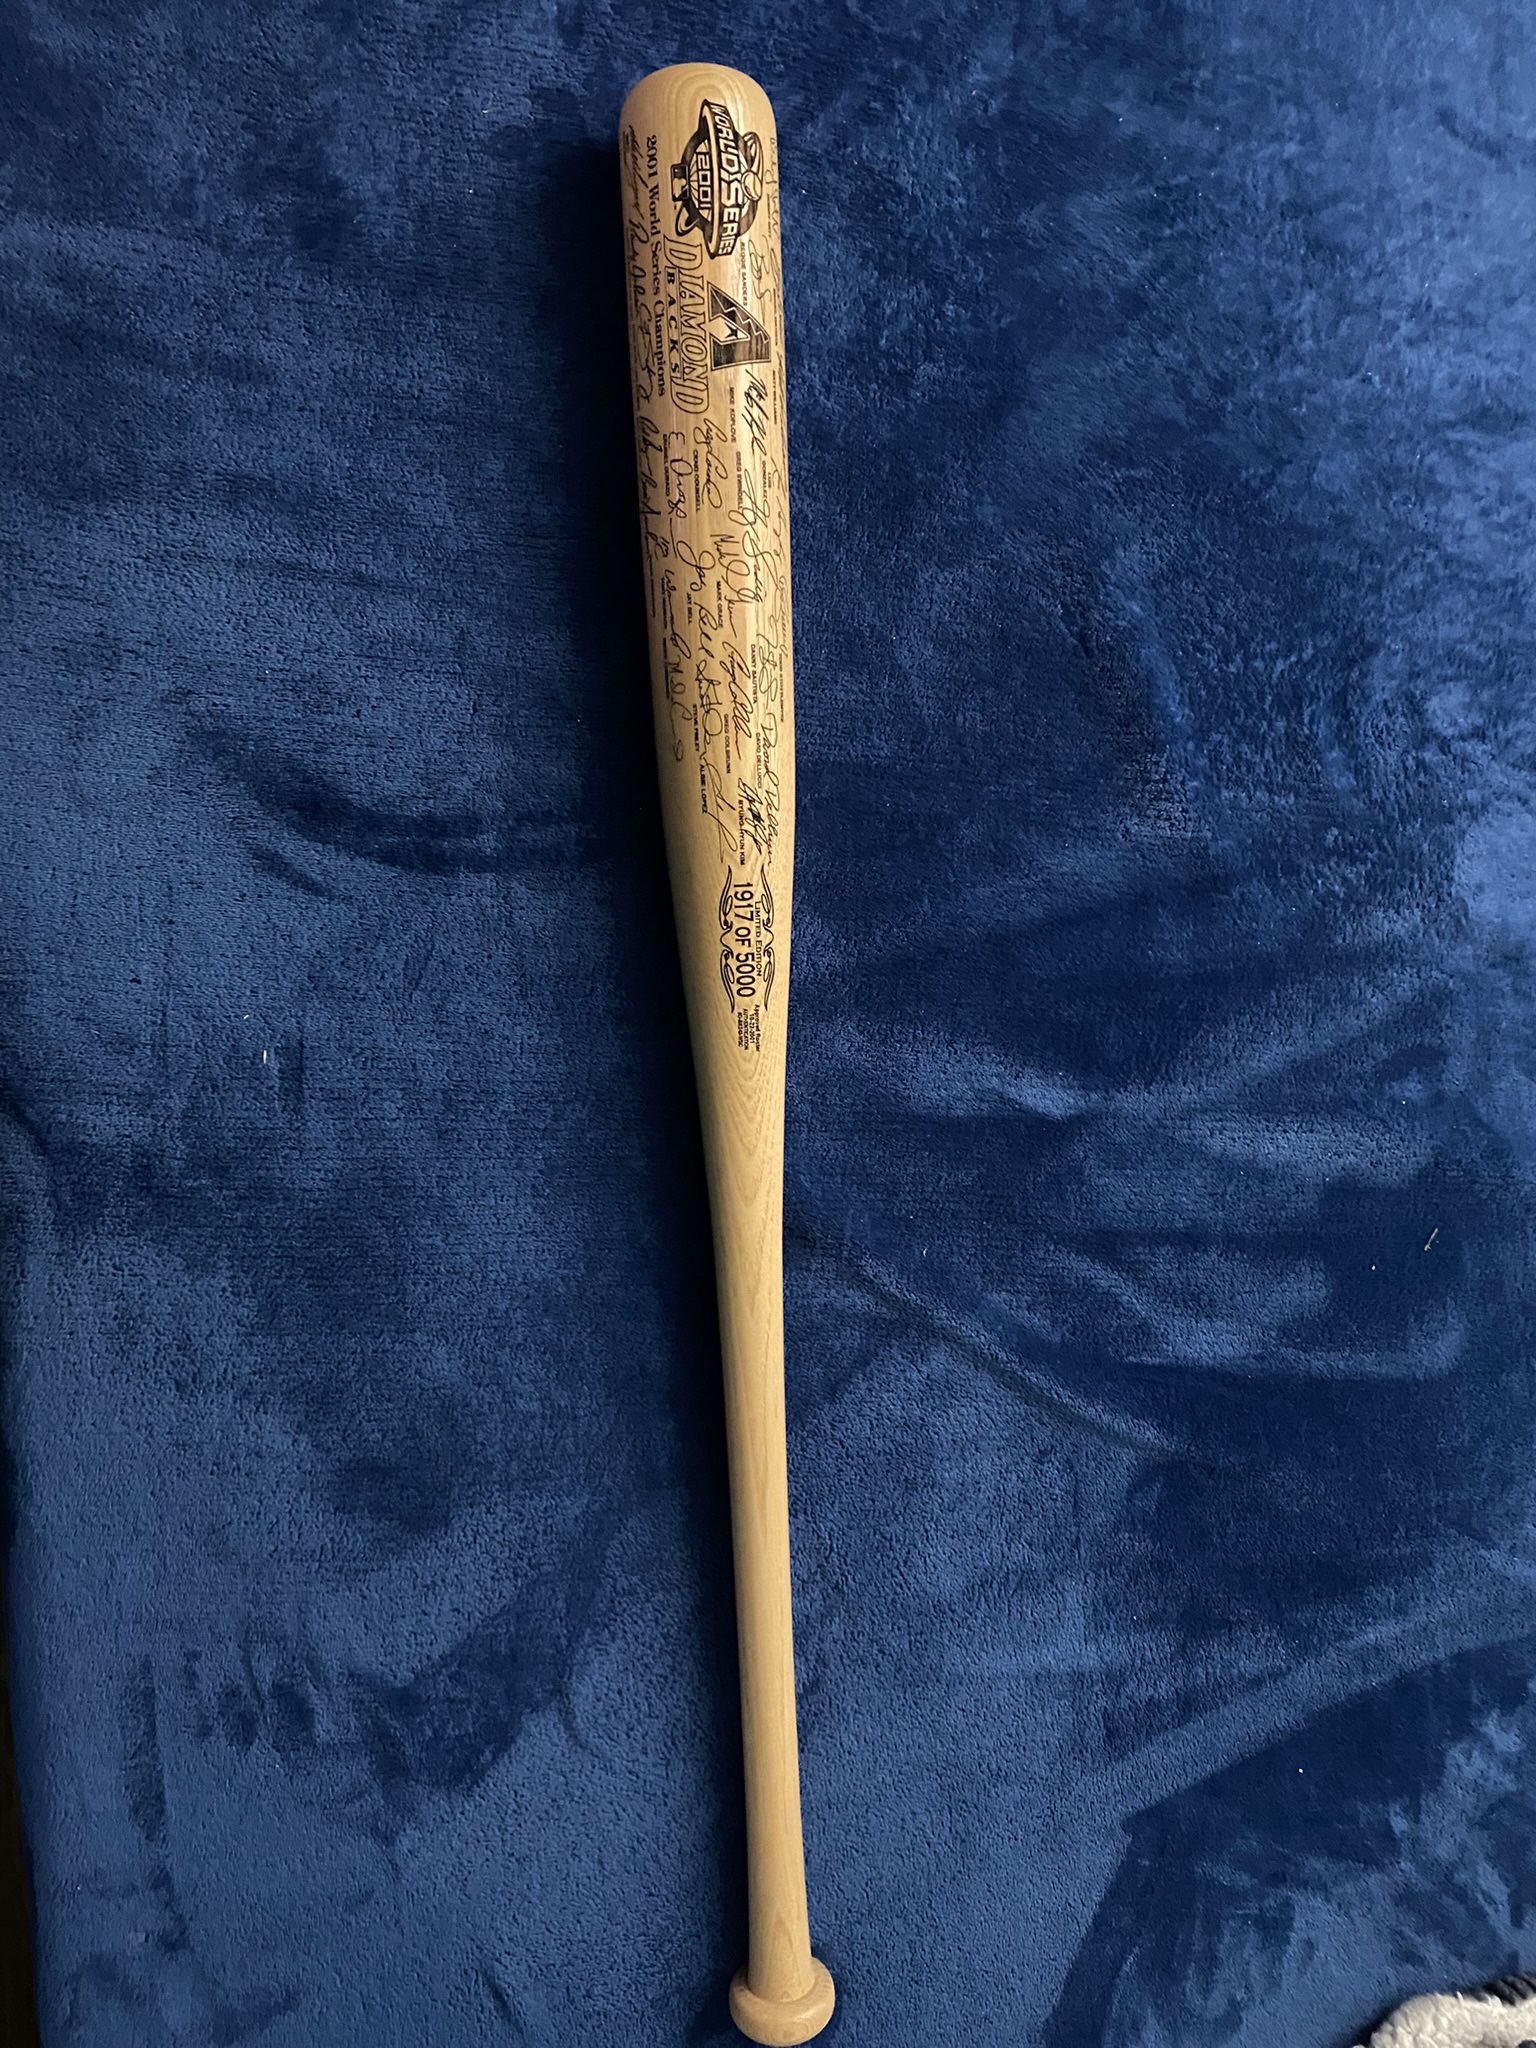 Authentic baseball bat of the champions of the 2001 world series Arizona diamond backs